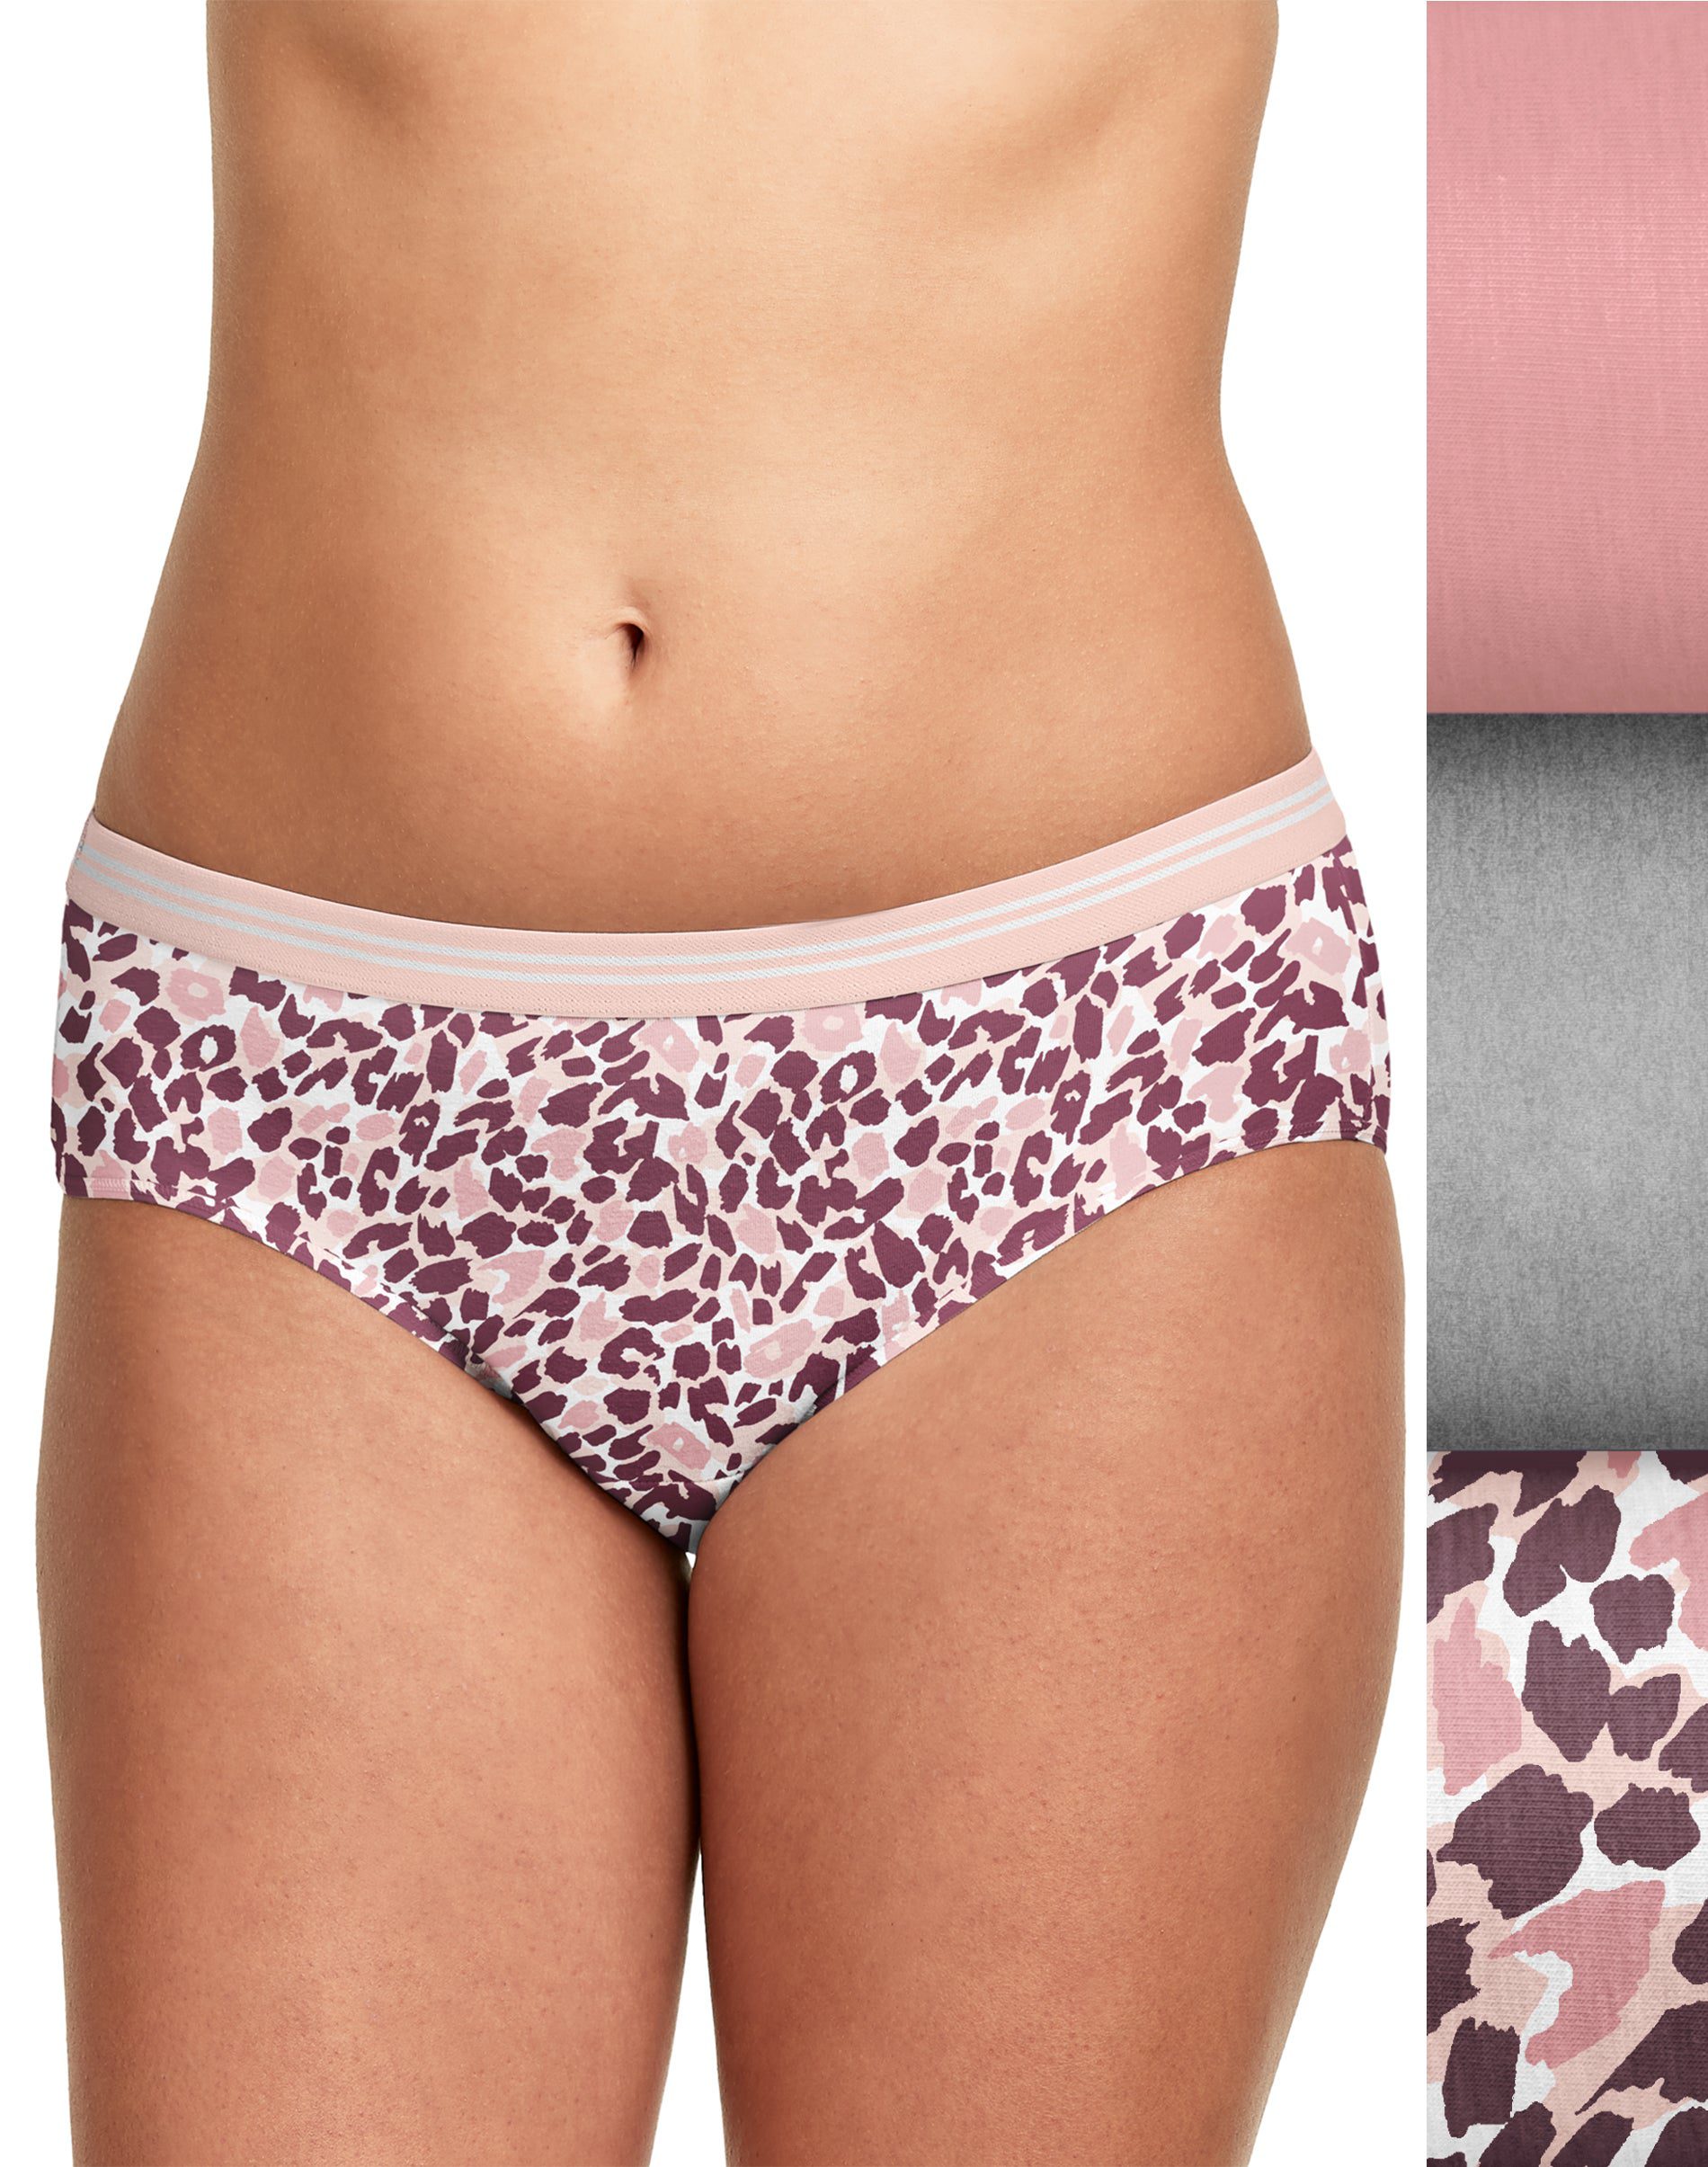 HANES Women's Ultimate Constant Comfort X-Temp Bikini Briefs, 3-Pack